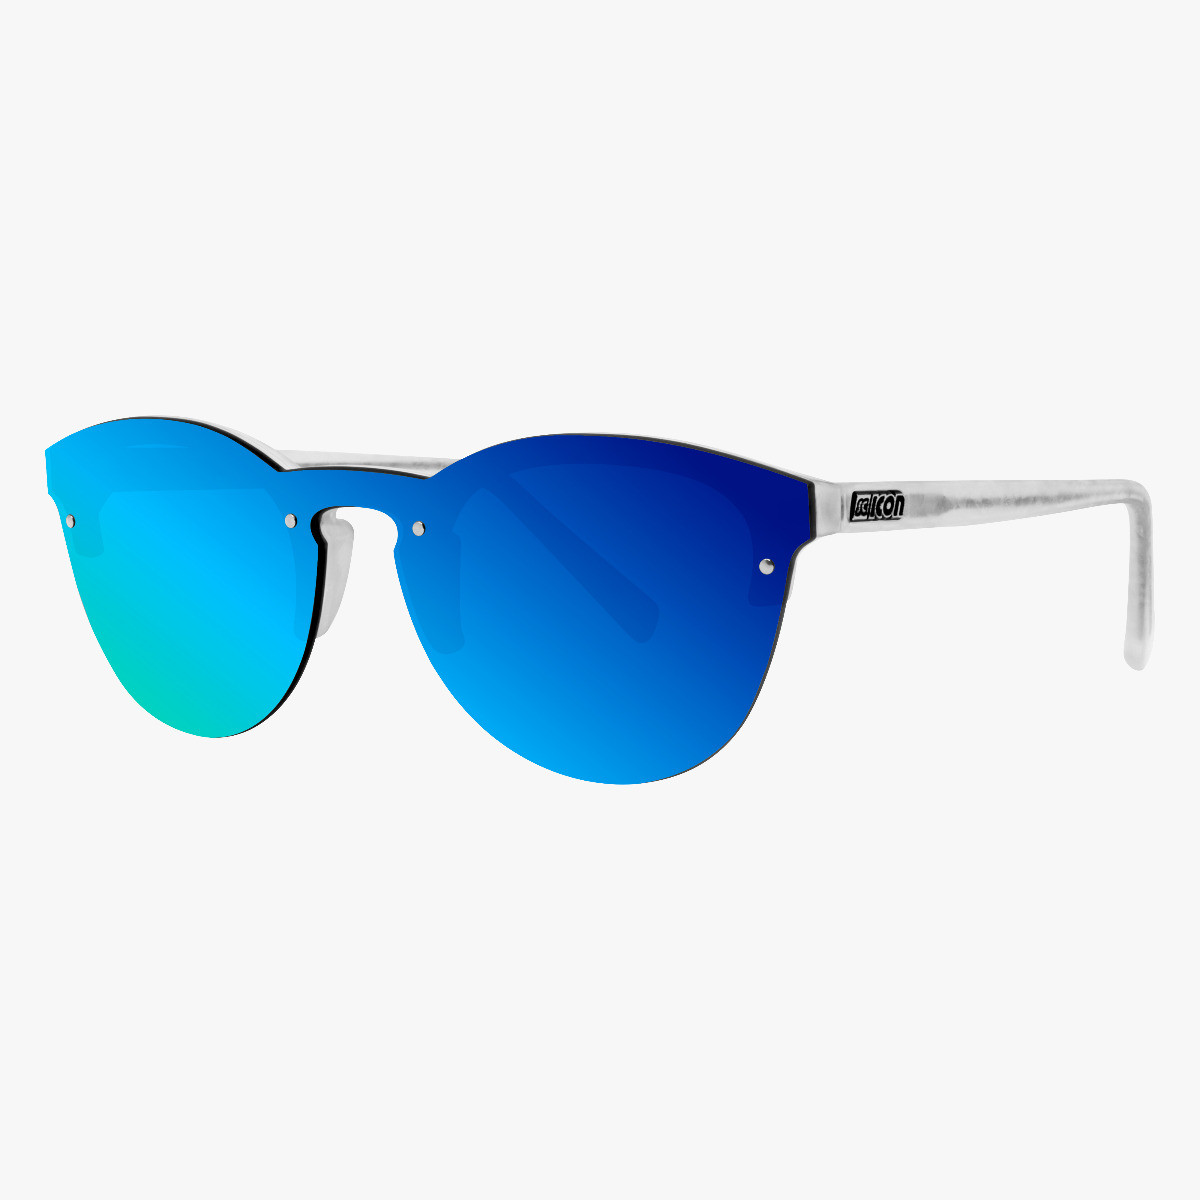 Scicon Sports | Protector Lifestyle Unisex Sunglasses - Frozen Frame, Blue Lens - EY170305